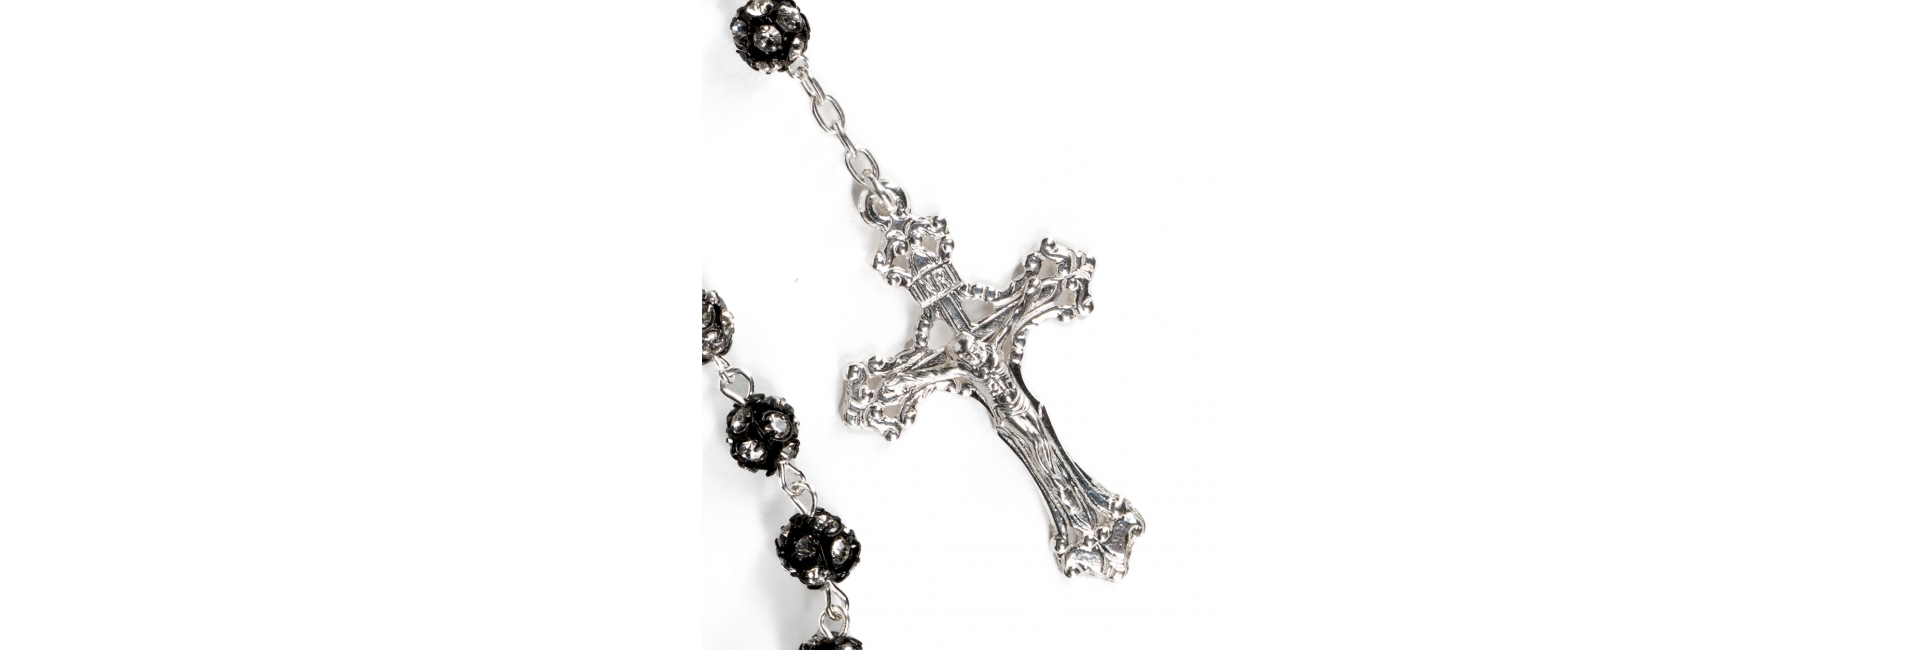 Buy Chrome Hearts Filigree Rosary Pendant Online at Groupie